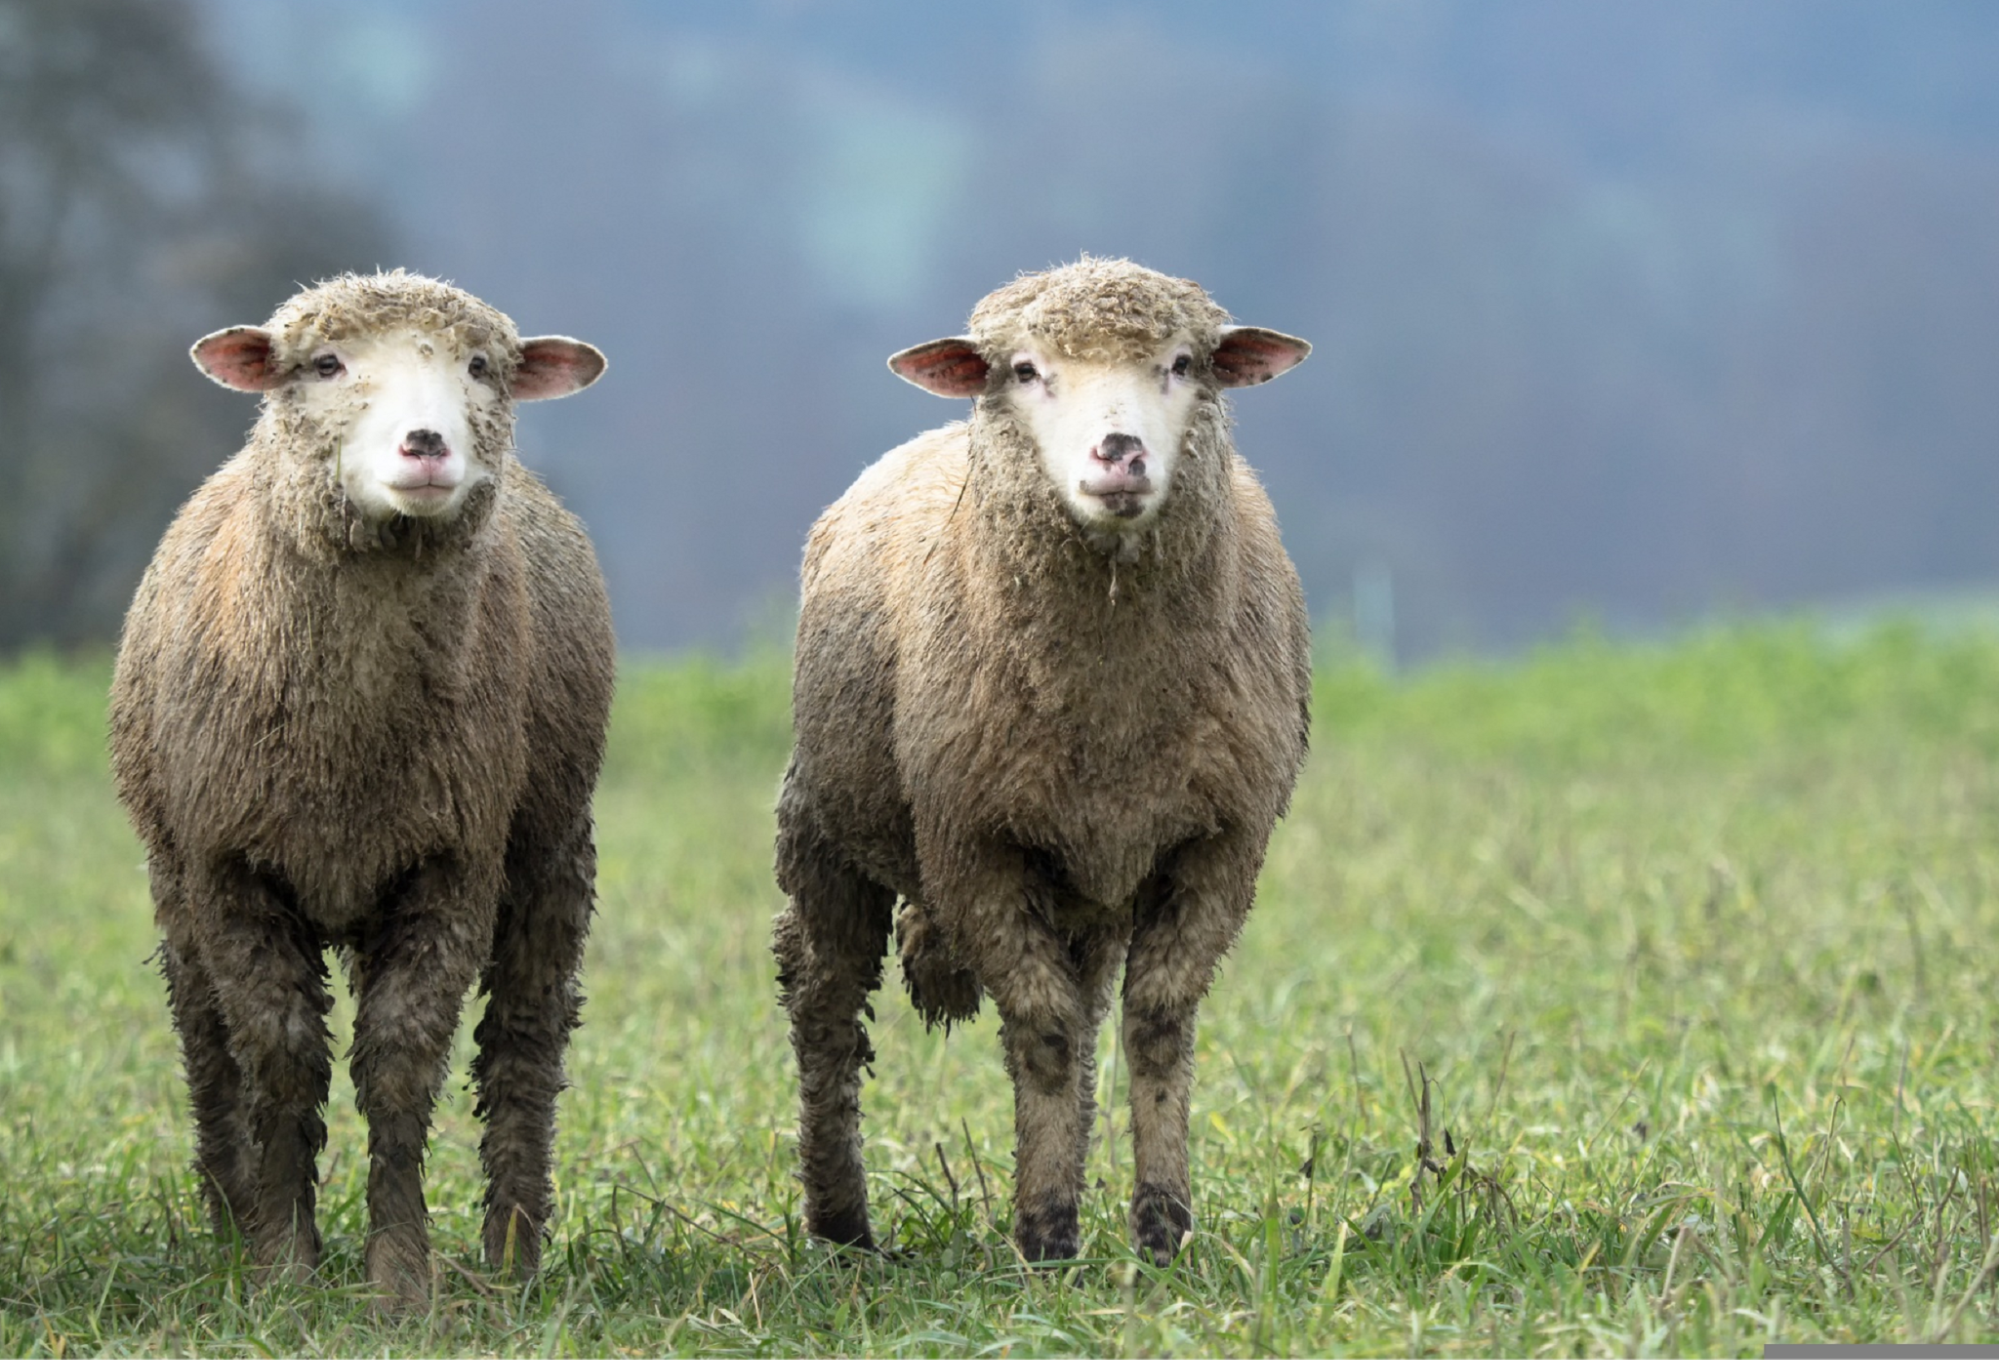 Look alike sheep